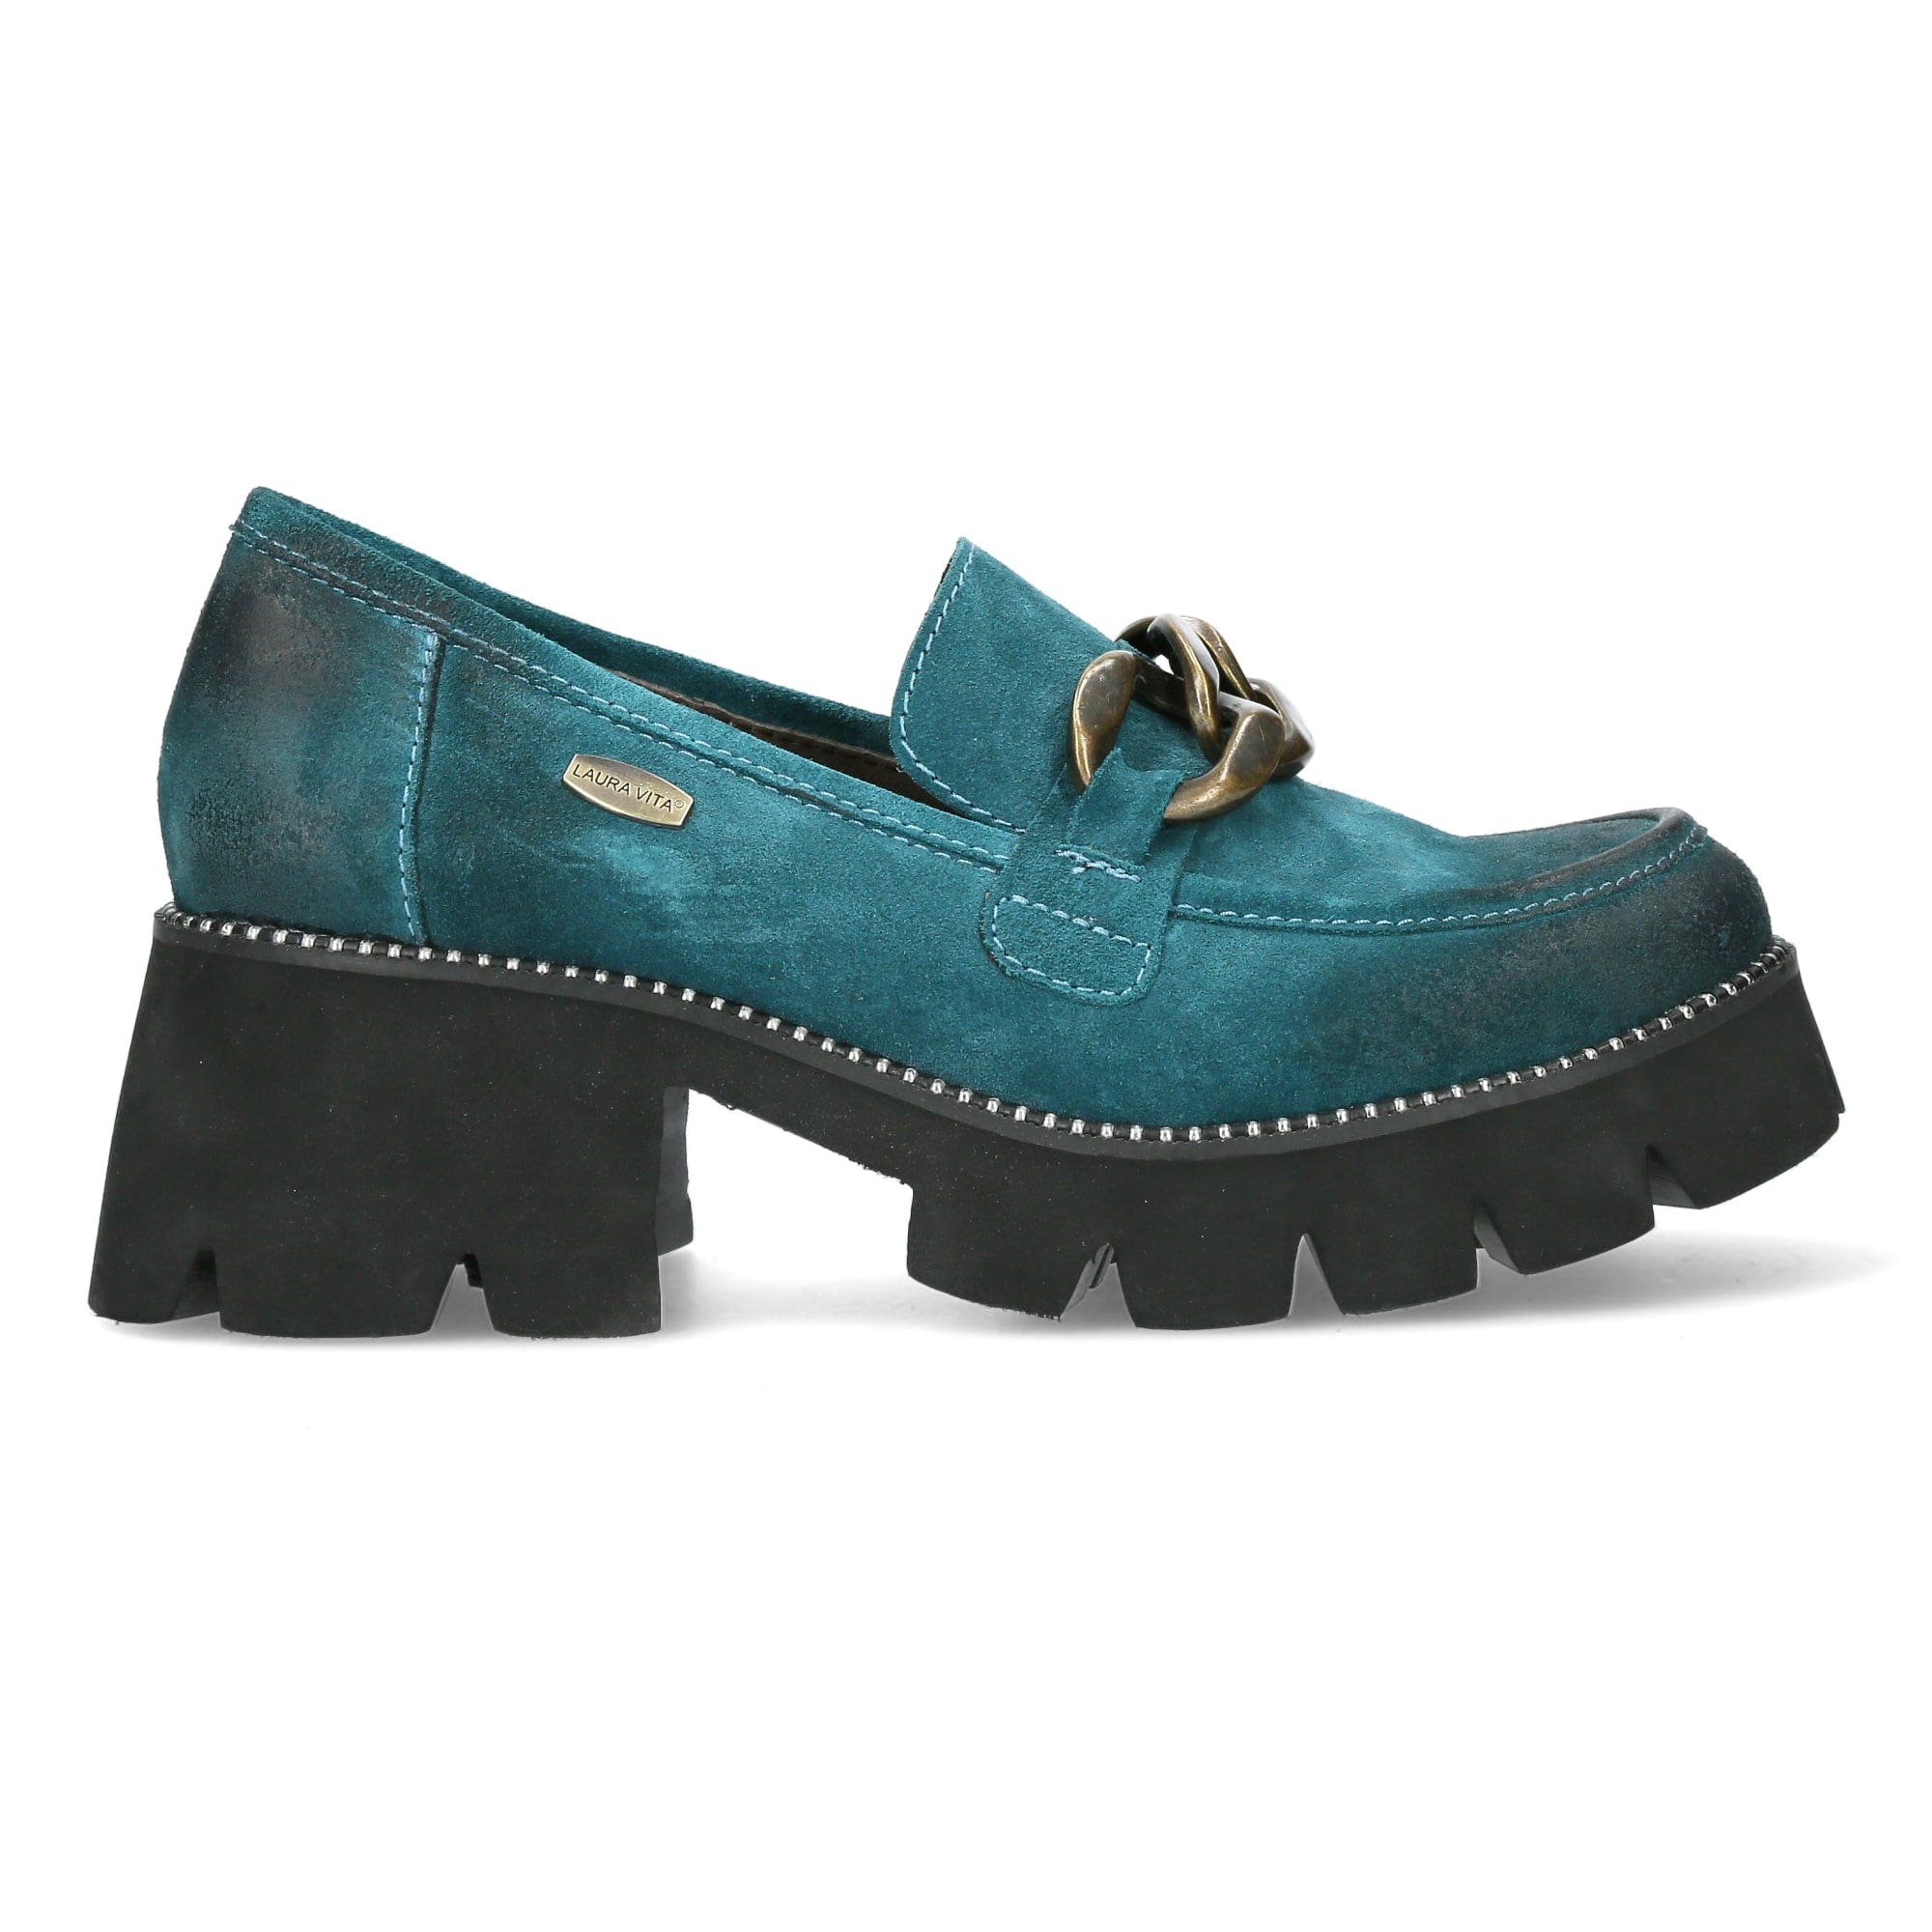 Shoe OMIO 07 - 35 / Turquoise - Moccasin